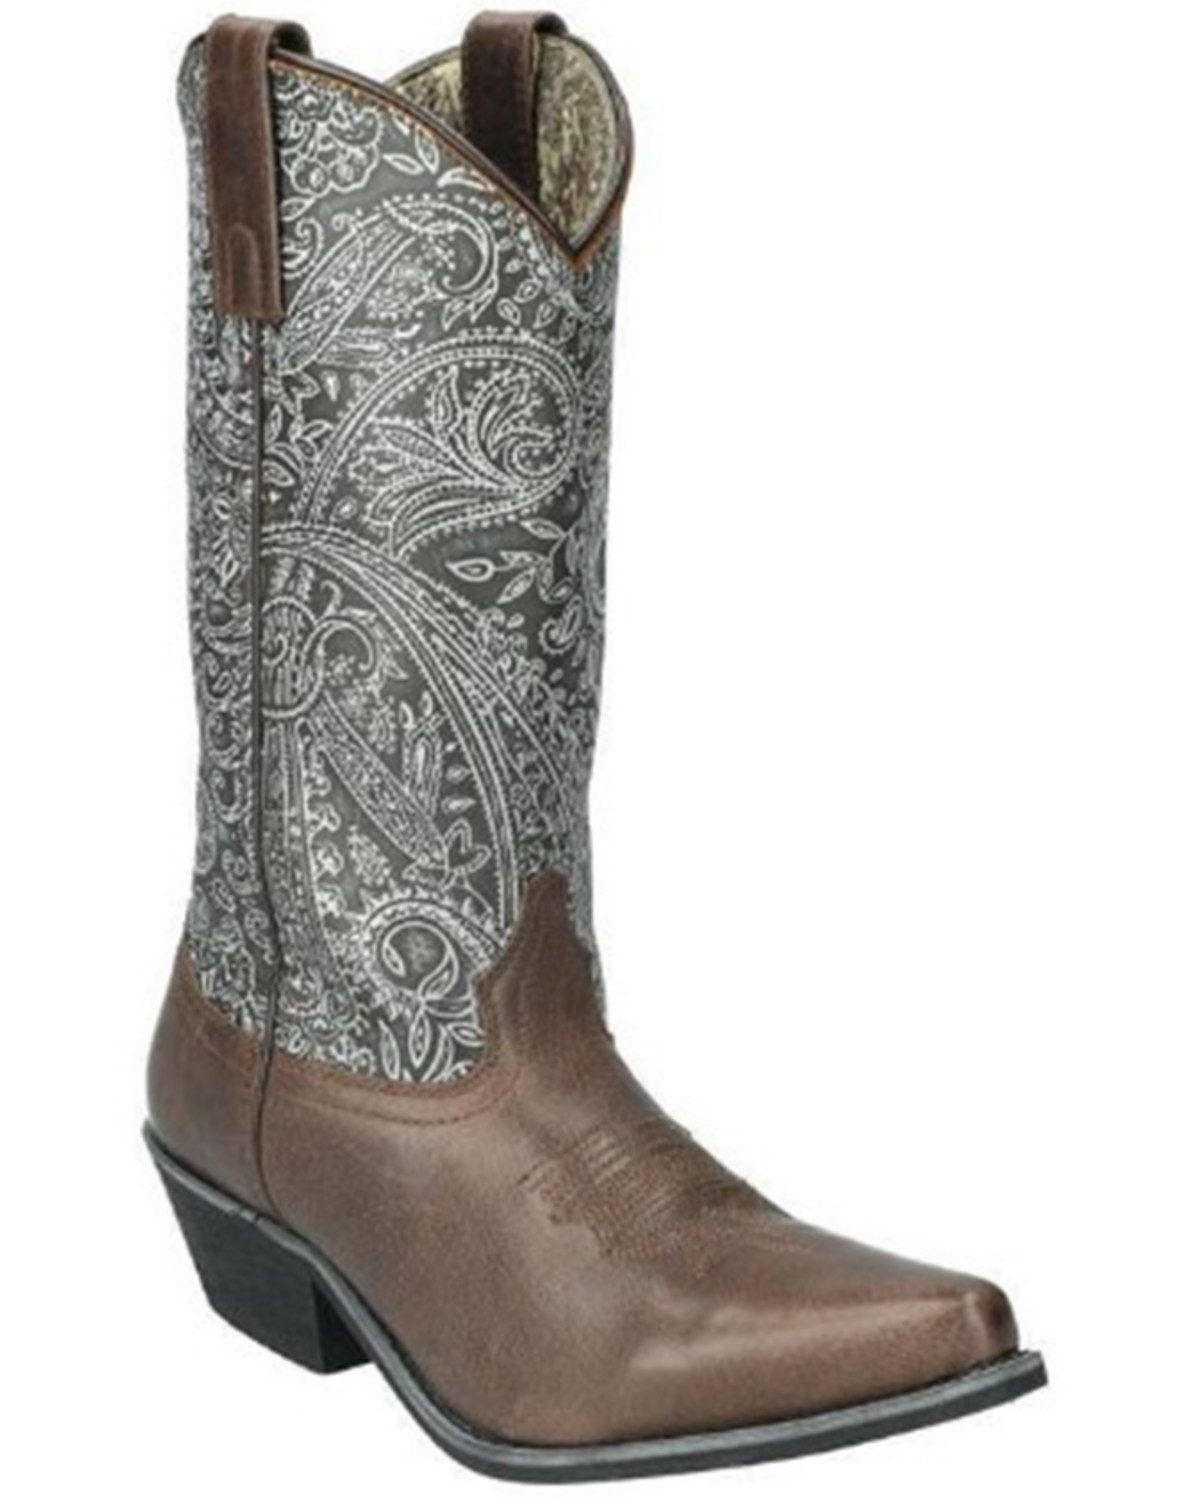 Smoky Mountain Women's Abigail Western Boots - Snip Toe